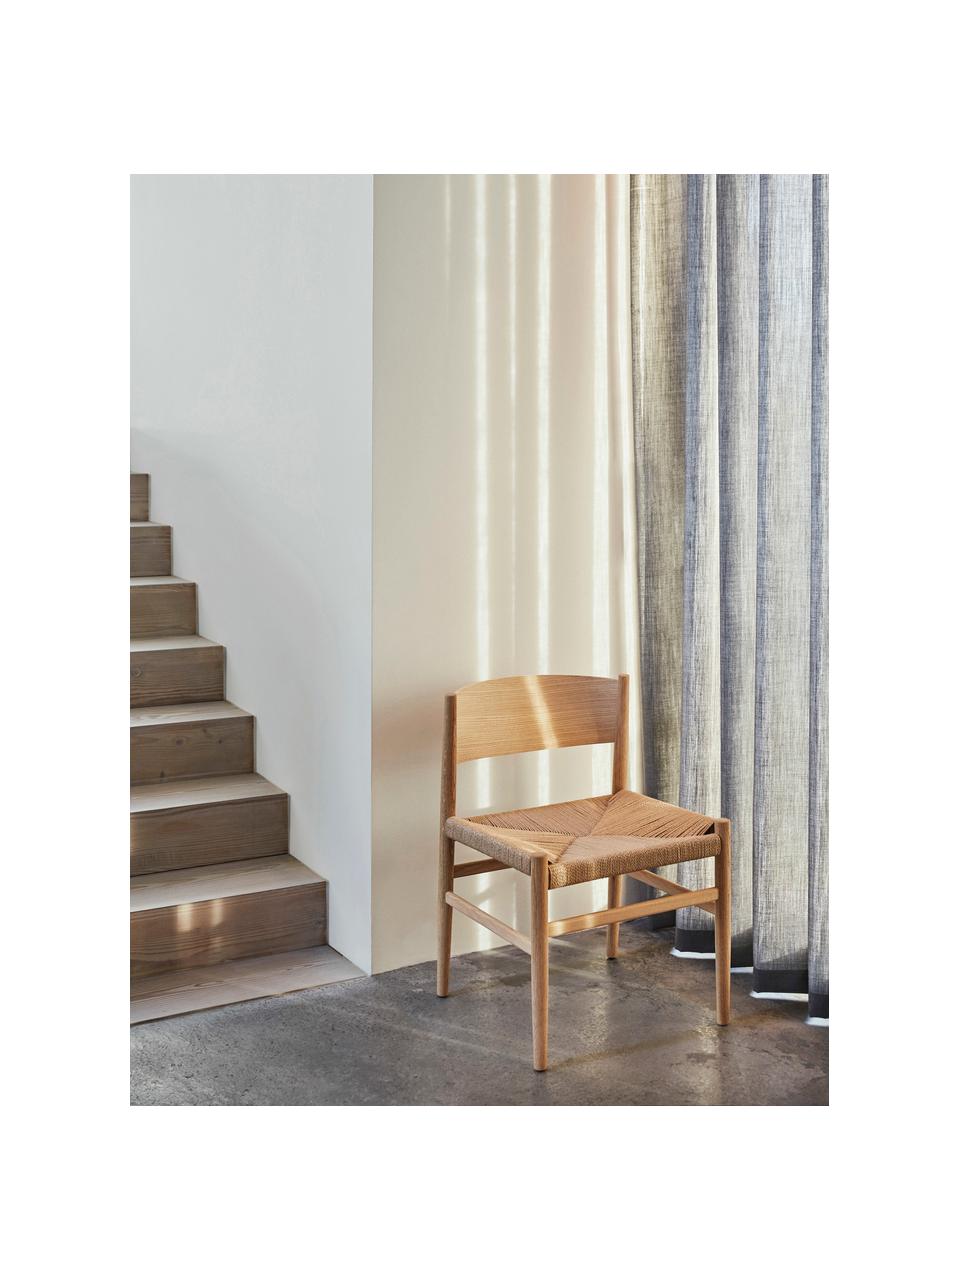 Houten stoel Nestor met gevlochten zitvlak, Zitvlak: papiergaas, Frame: eikenhout Dit product is , Lichtbeige, eikenhout, licht, B 50 x D 53 cm